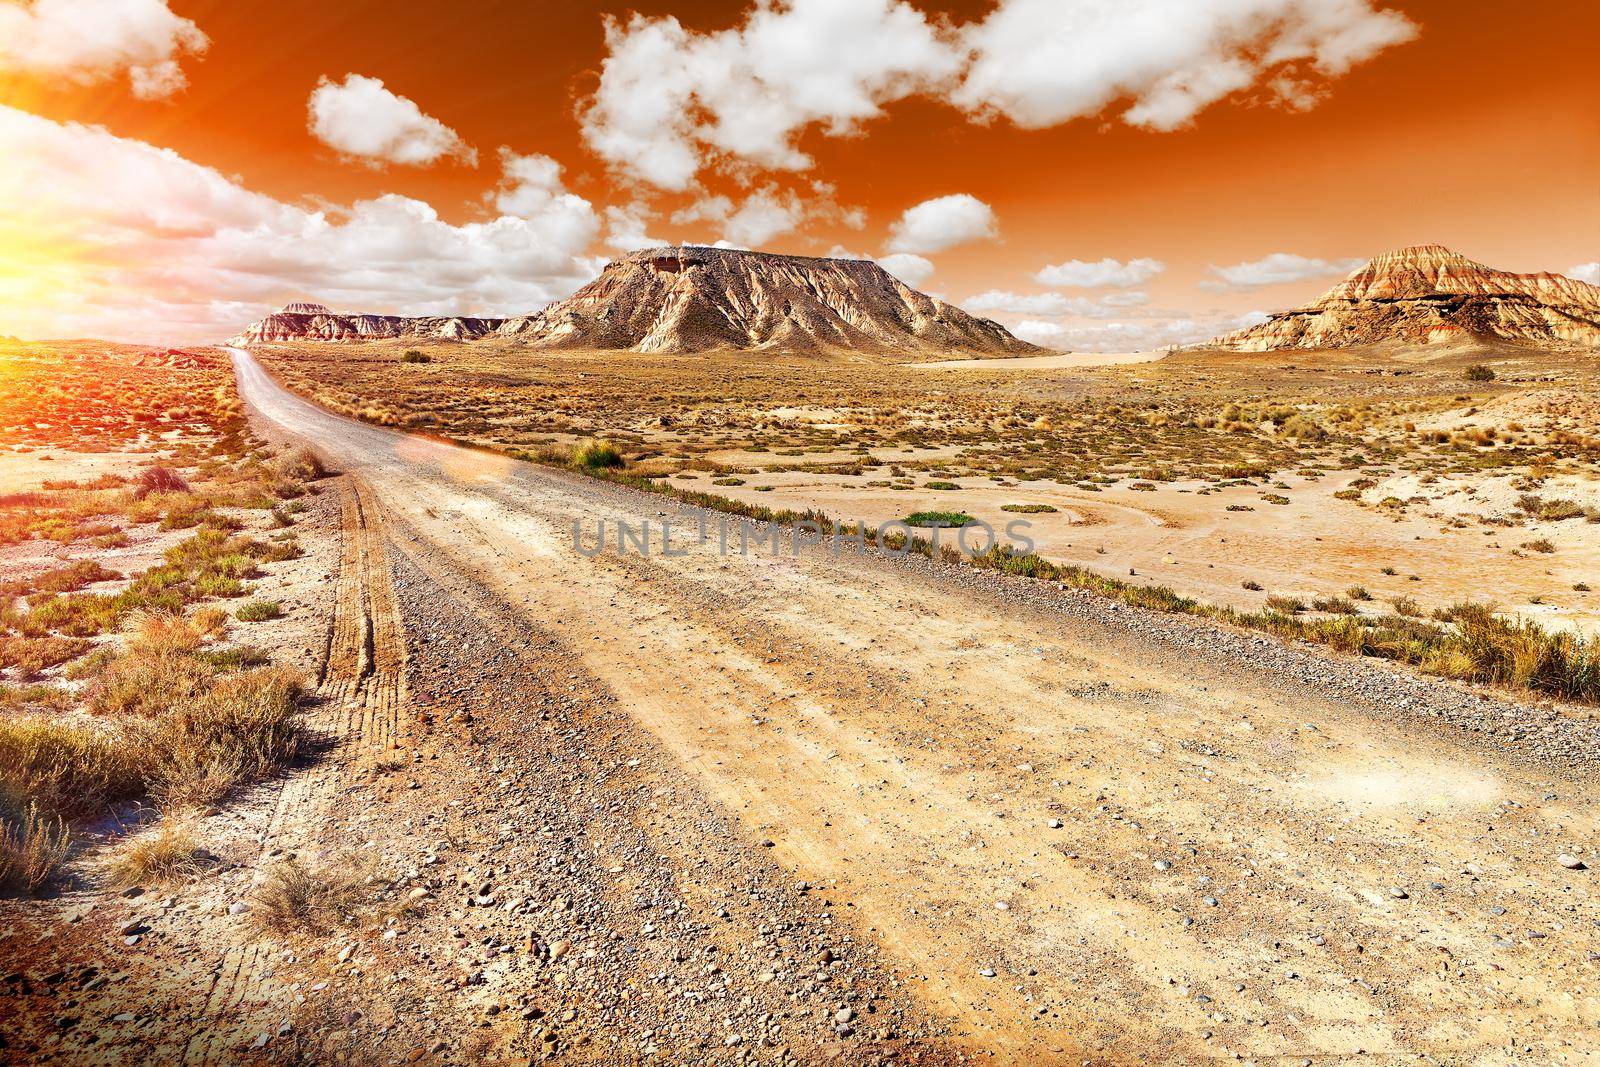 Travel and adventures through remote panoramic desert landscape